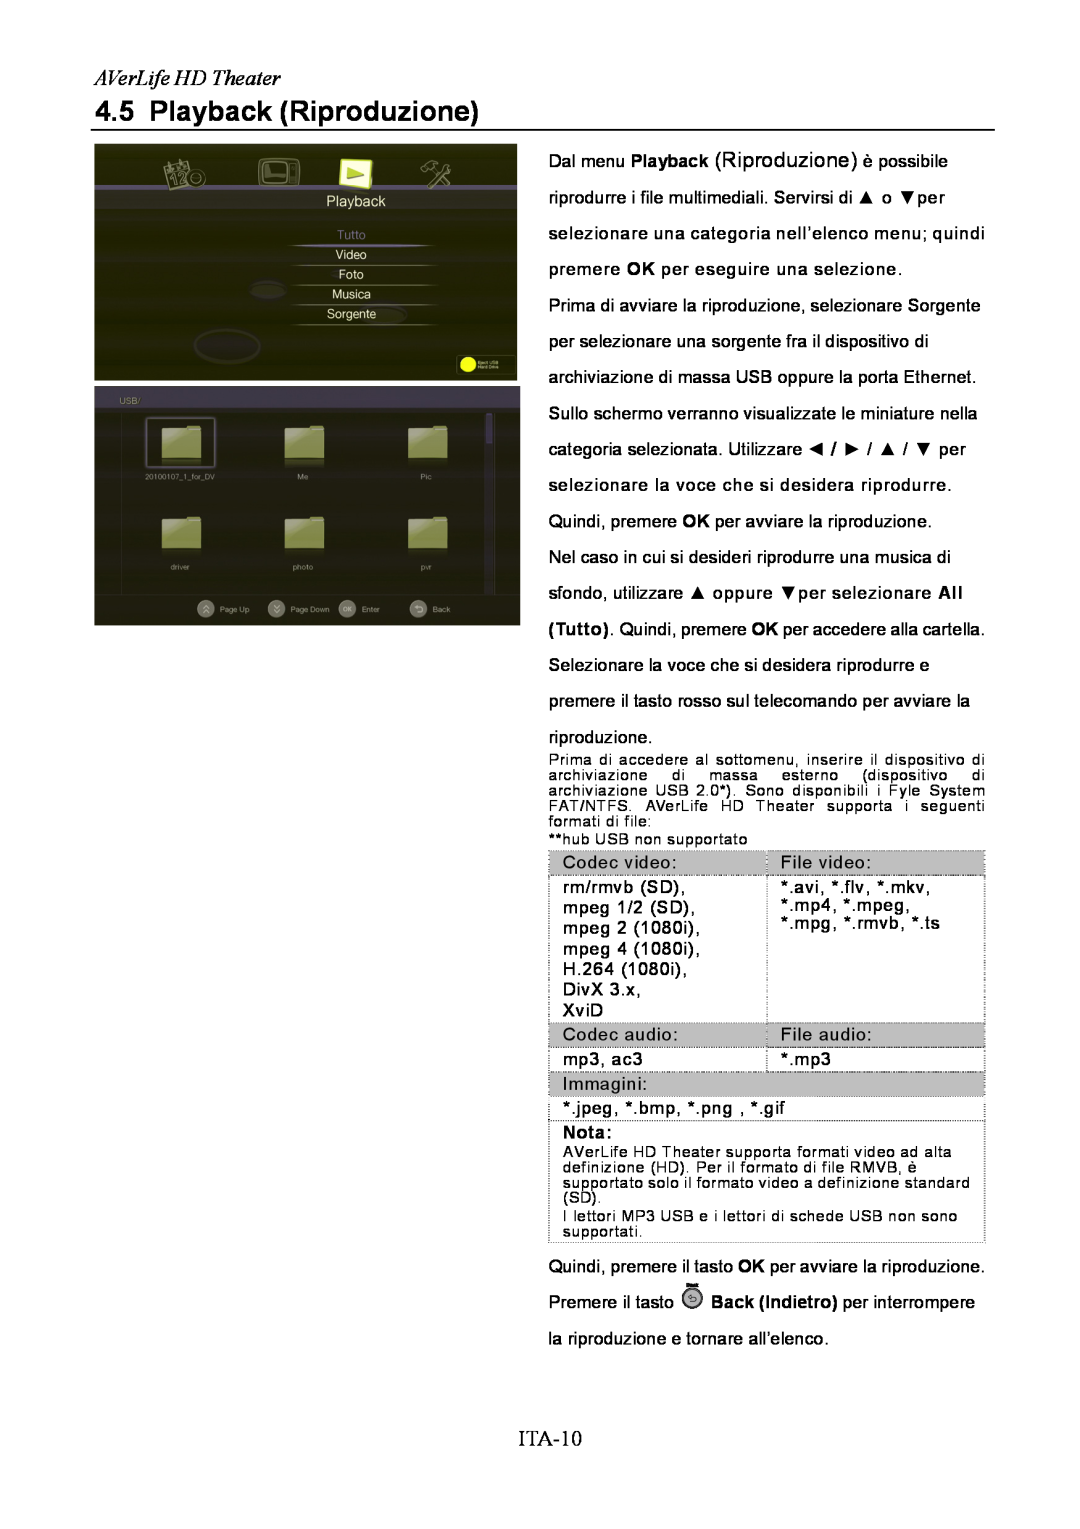 AVerMedia Technologies A211 user manual Playback Riproduzione, AVerLife HD Theater, ITA-10 